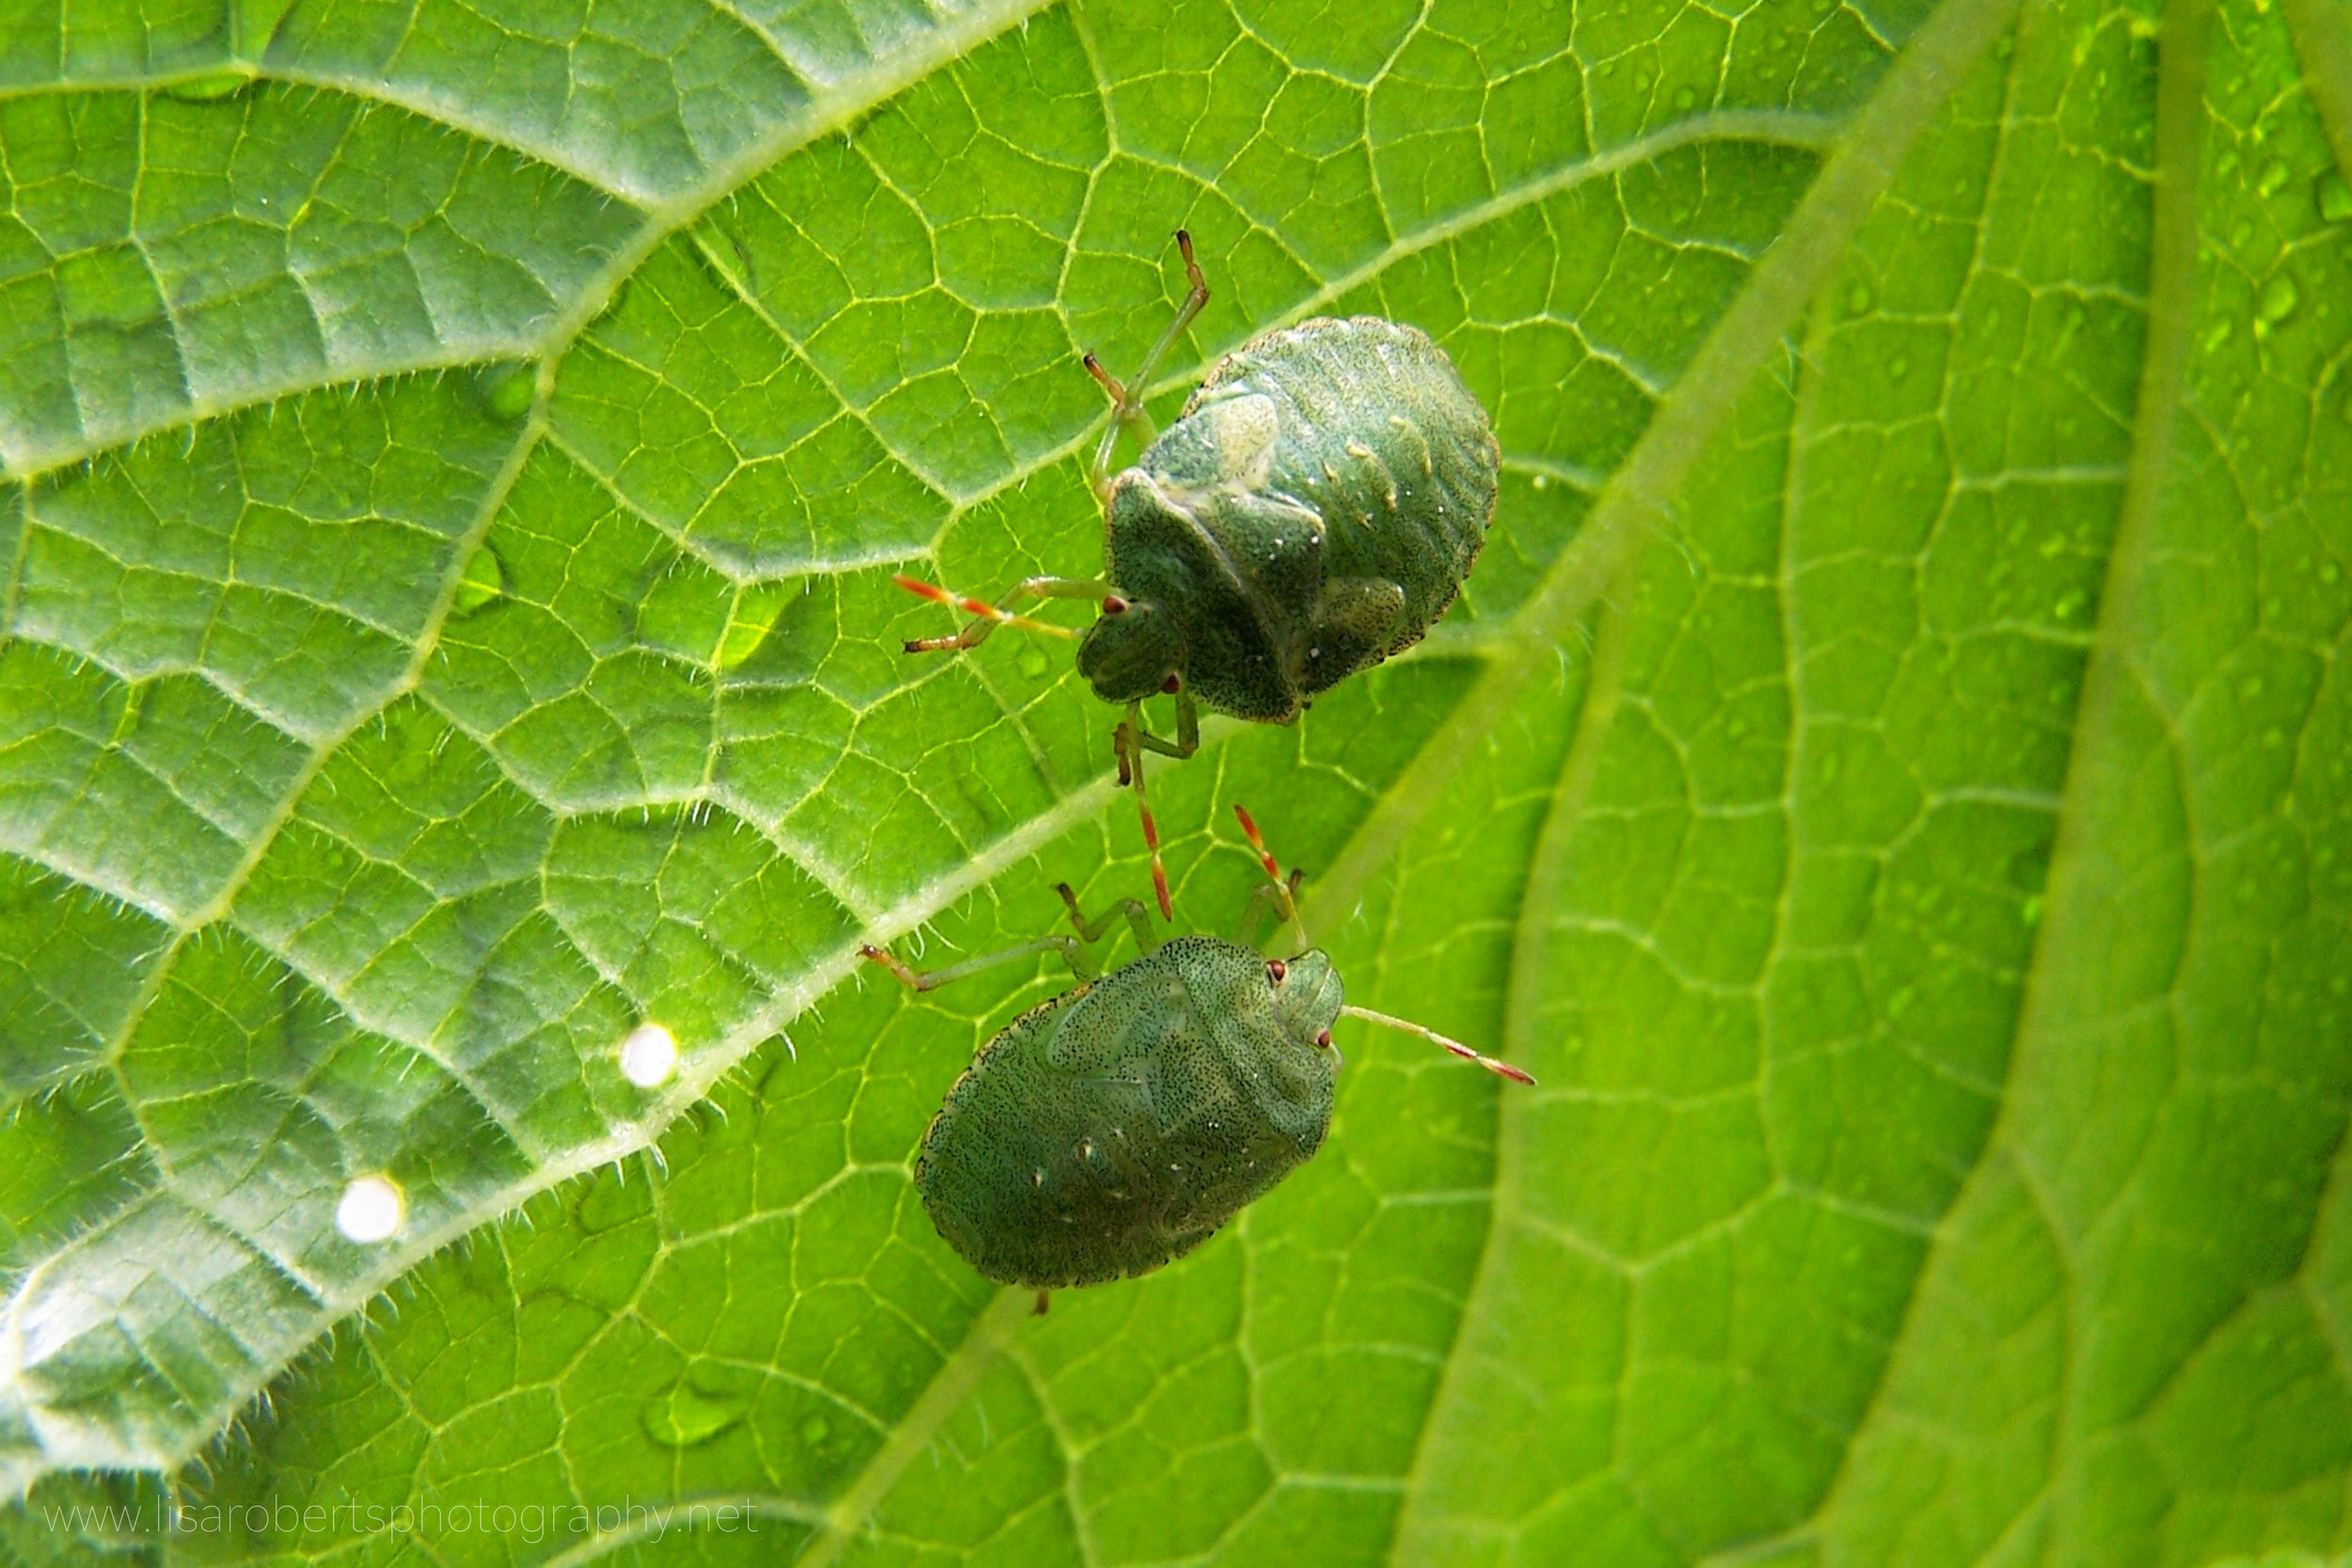  Green Shield Bugs (Stink Bugs) on leaf 